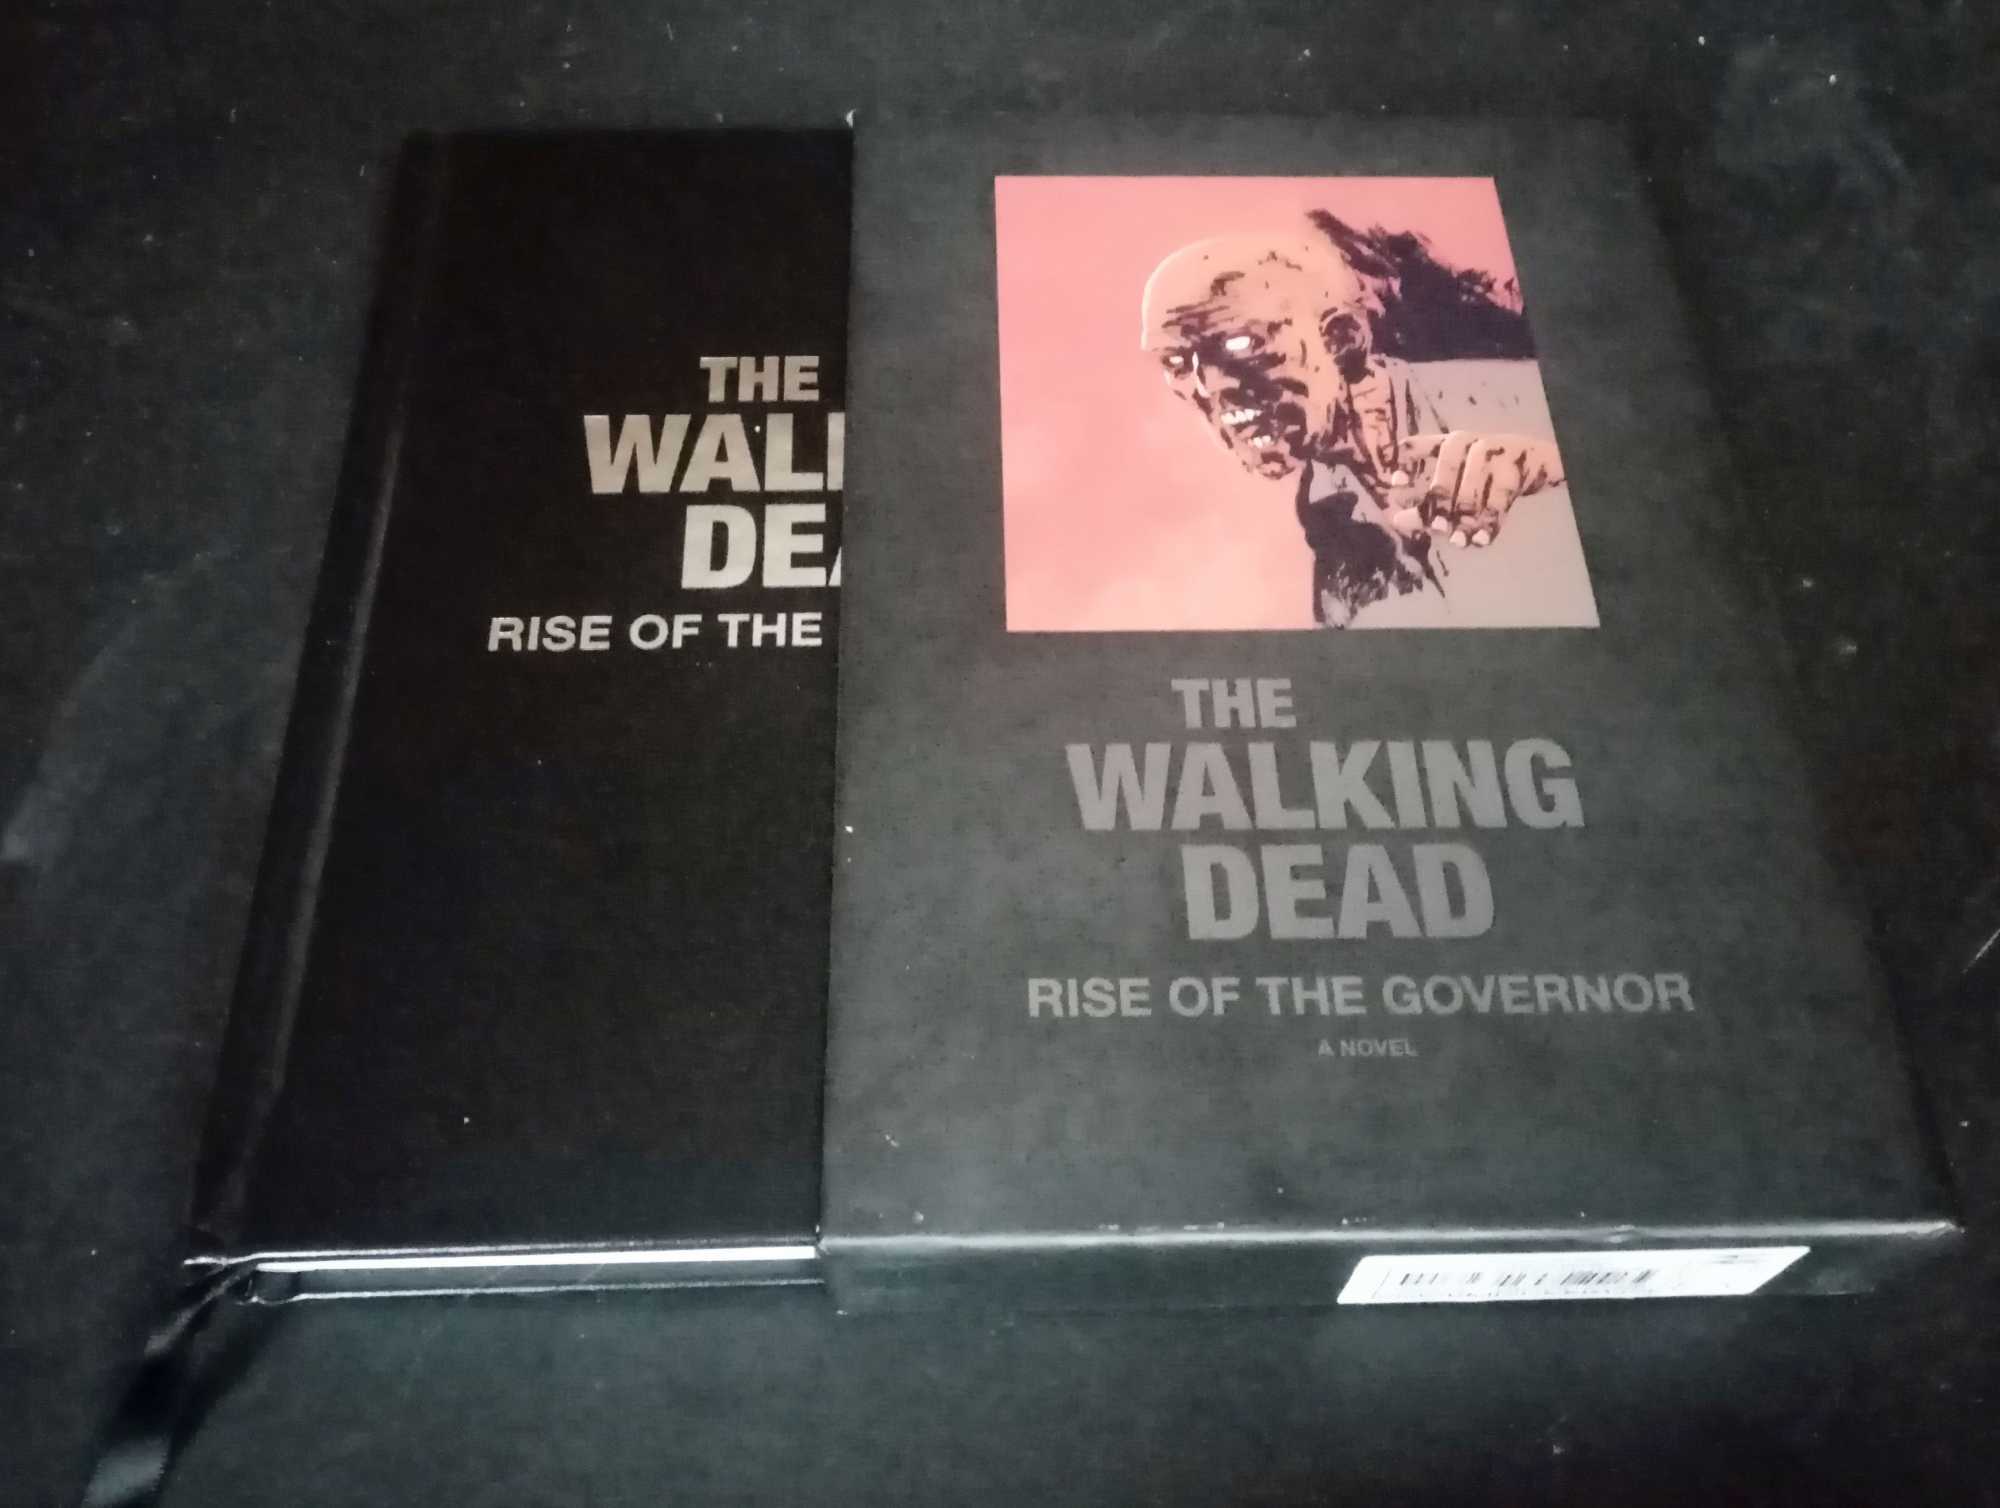 Robert Kirkman Jay bonansinga - The Walking Dead: Rise of the Governor. Deluxe Slipcased Edition